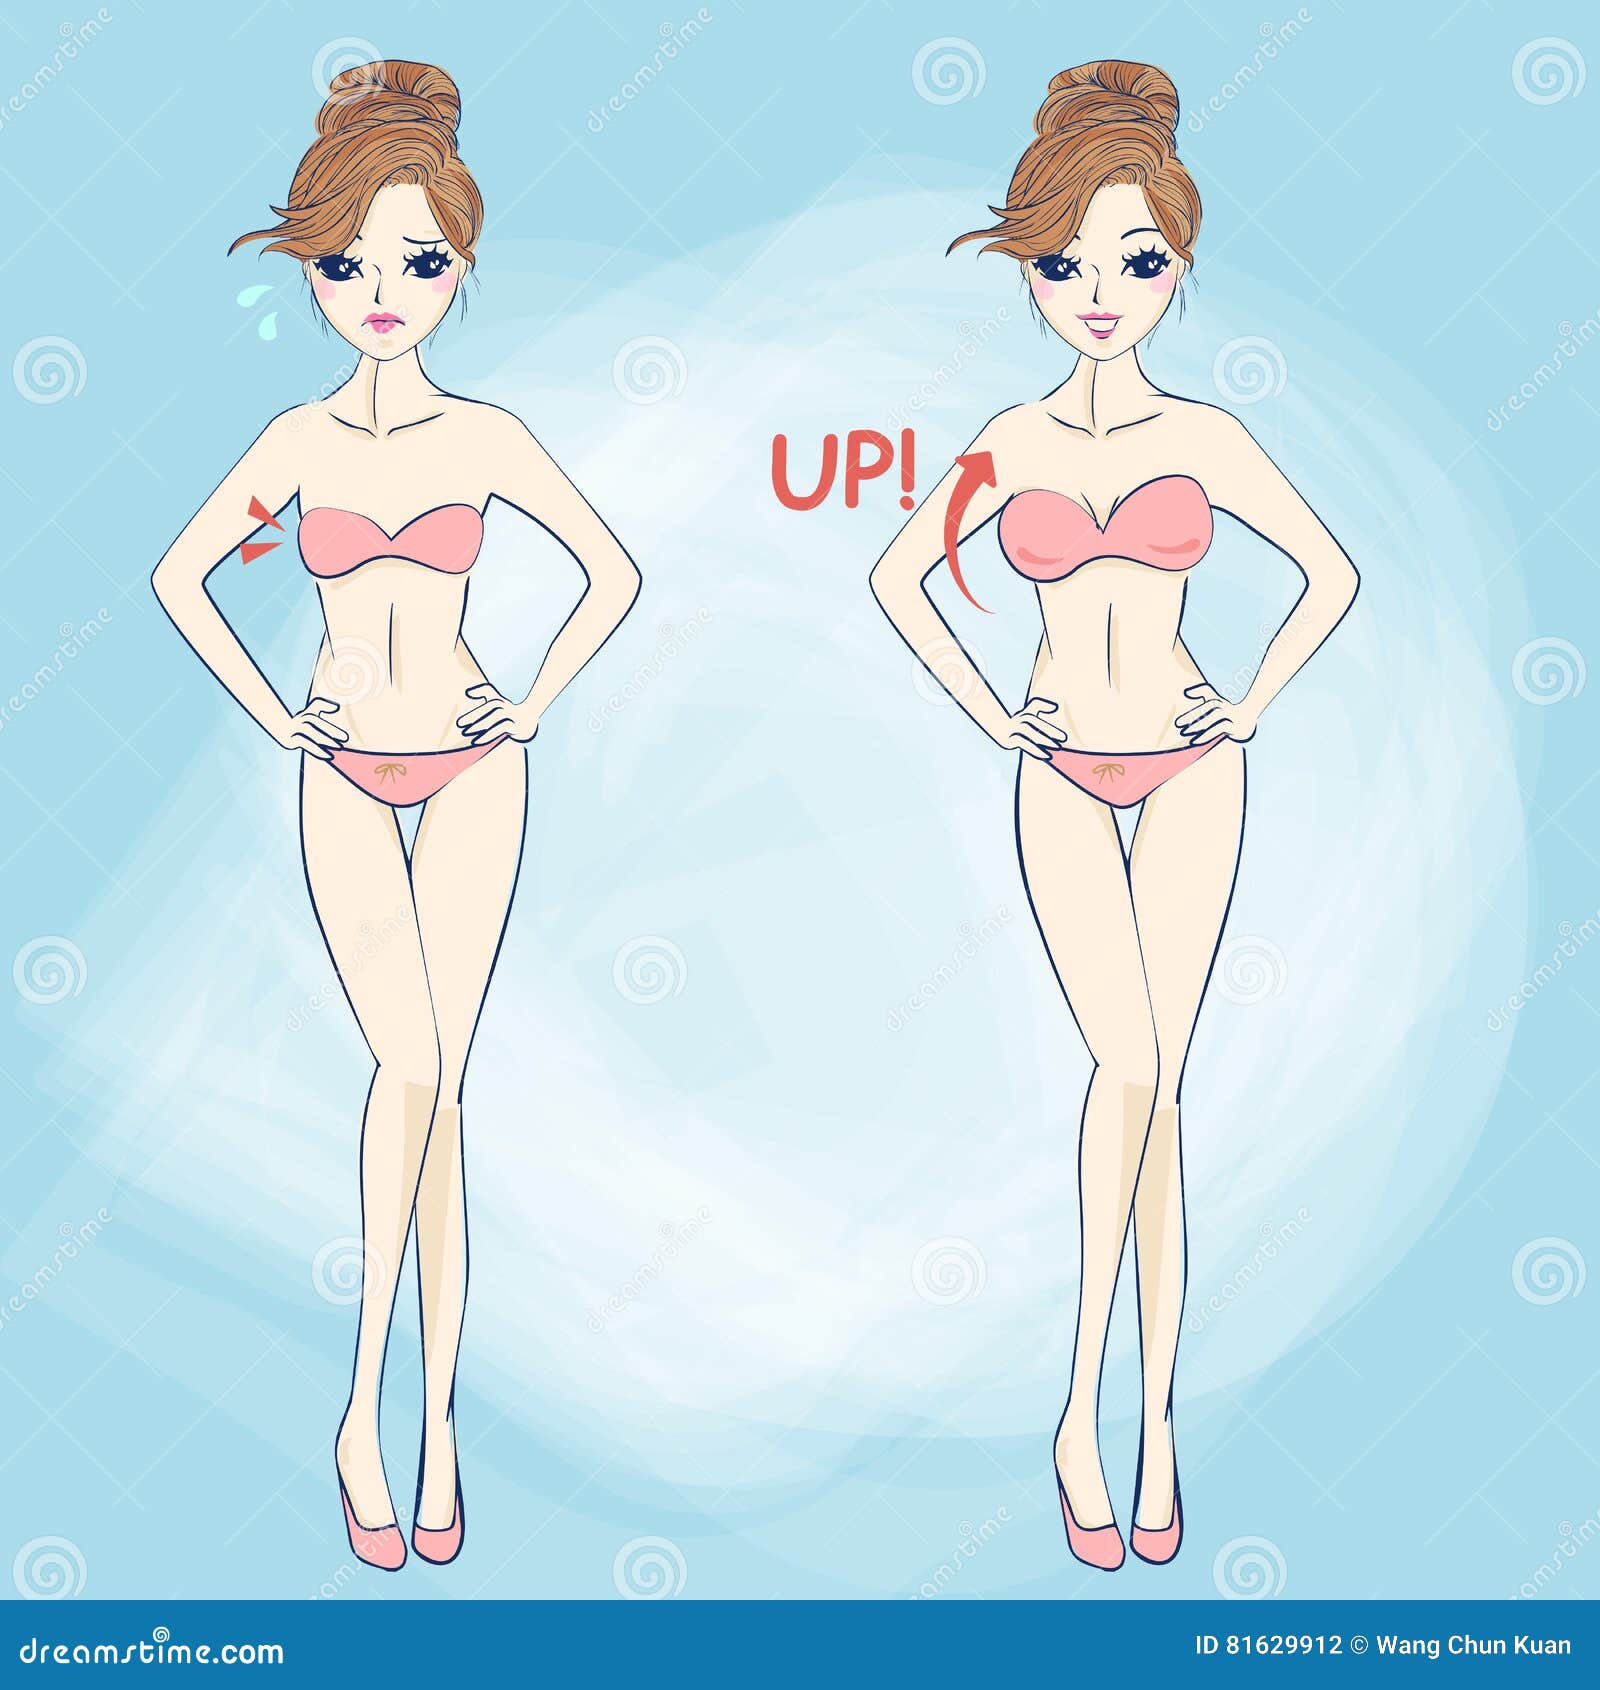 https://thumbs.dreamstime.com/z/cartooon-woman-different-cup-size-wear-underwear-has-81629912.jpg